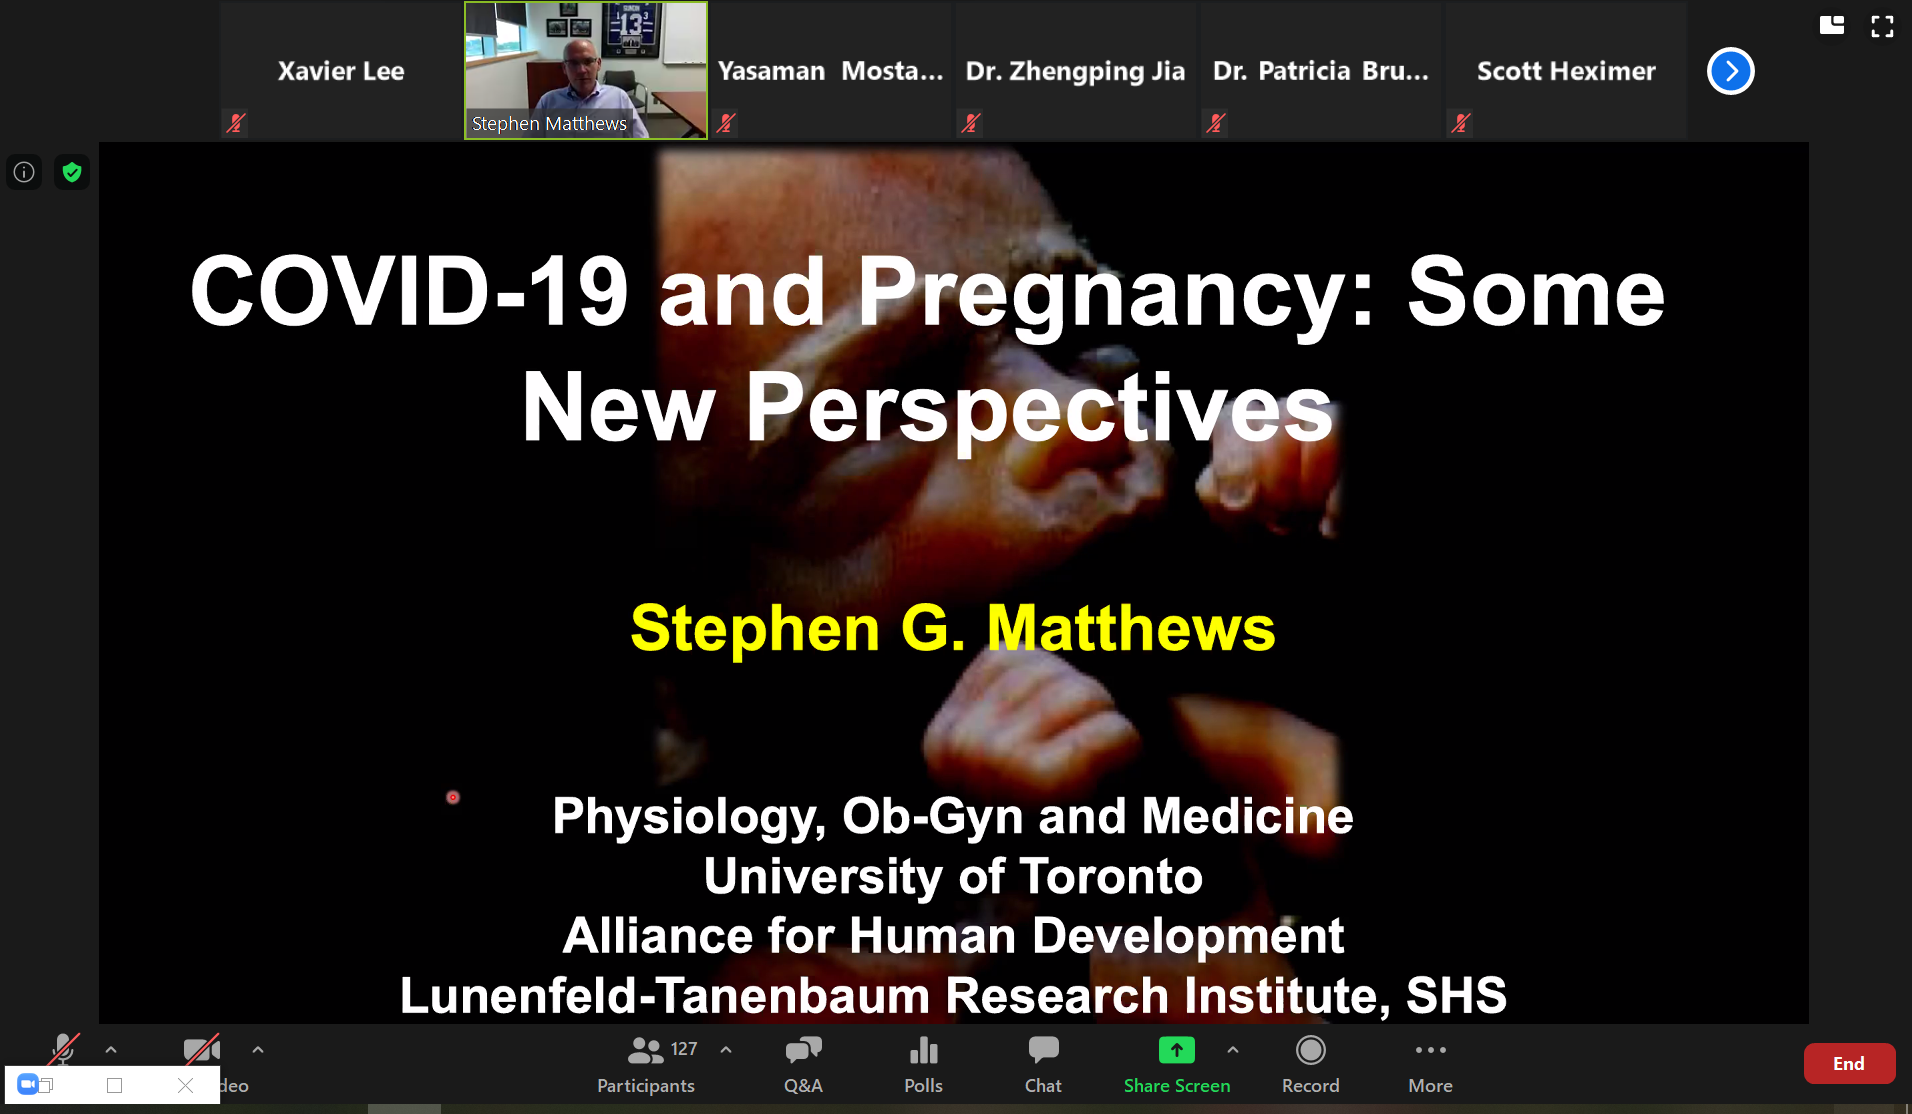 screen shot of Professor Stephen Matthews' keynote talk